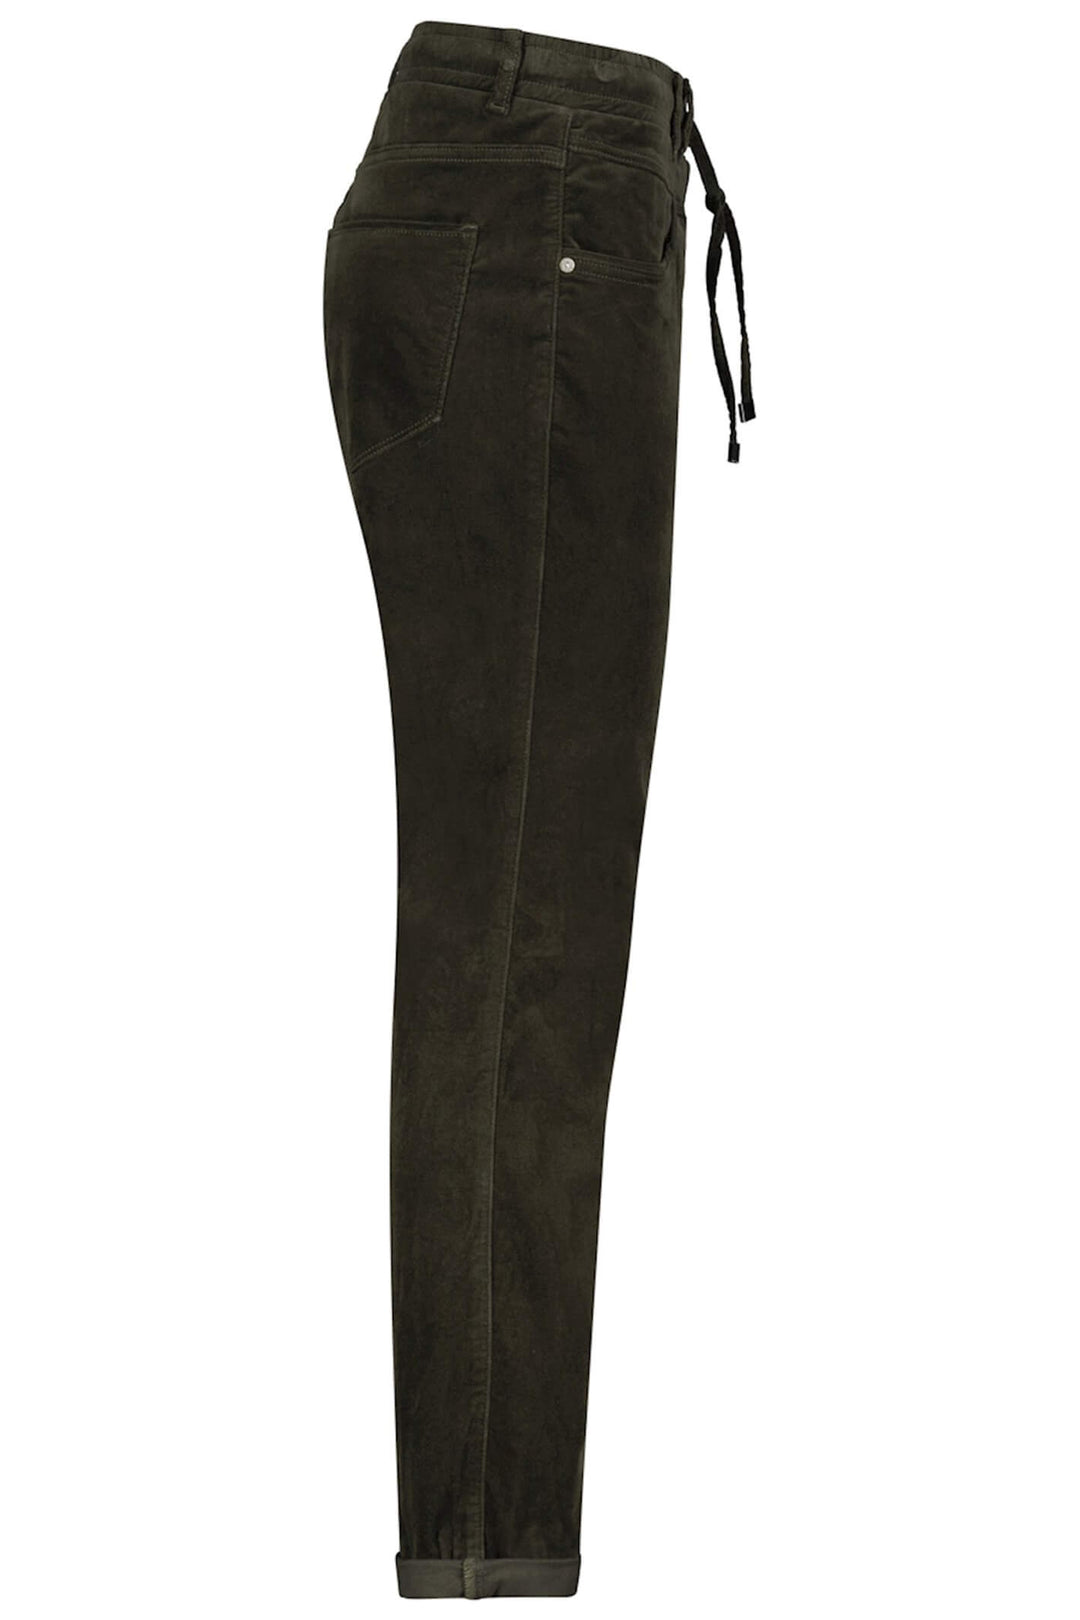 Red Button SRB4052 Tessy Dark Green Velvet Pull On Trousers - Olivia Grace Fashion